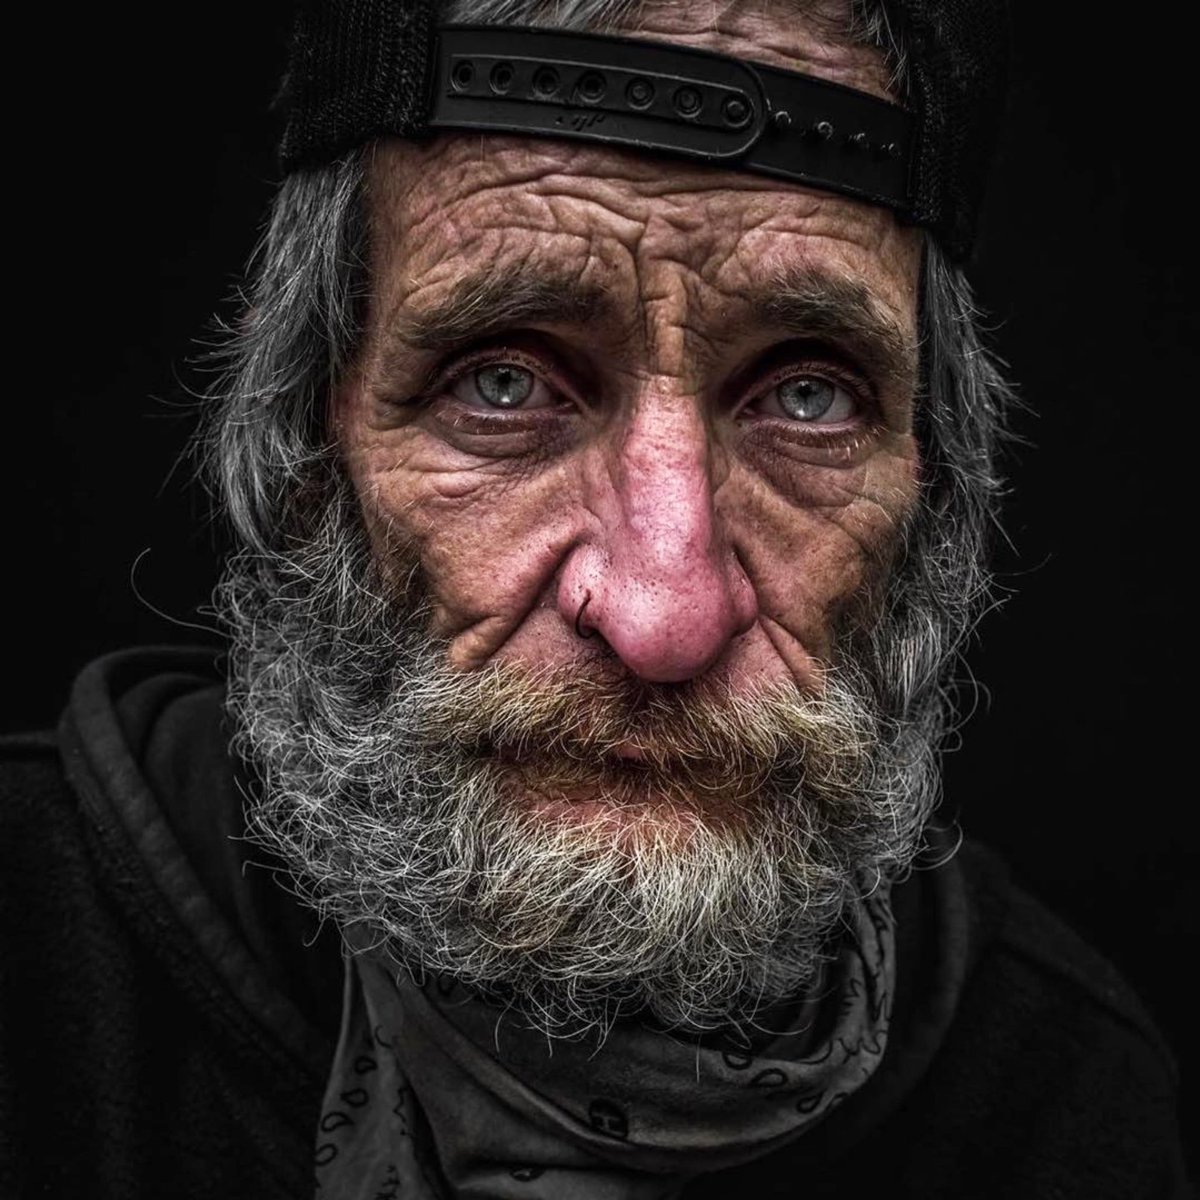 Бомж голова. Старик бомж. Фотопортрет бомжа. Бездомный старик.